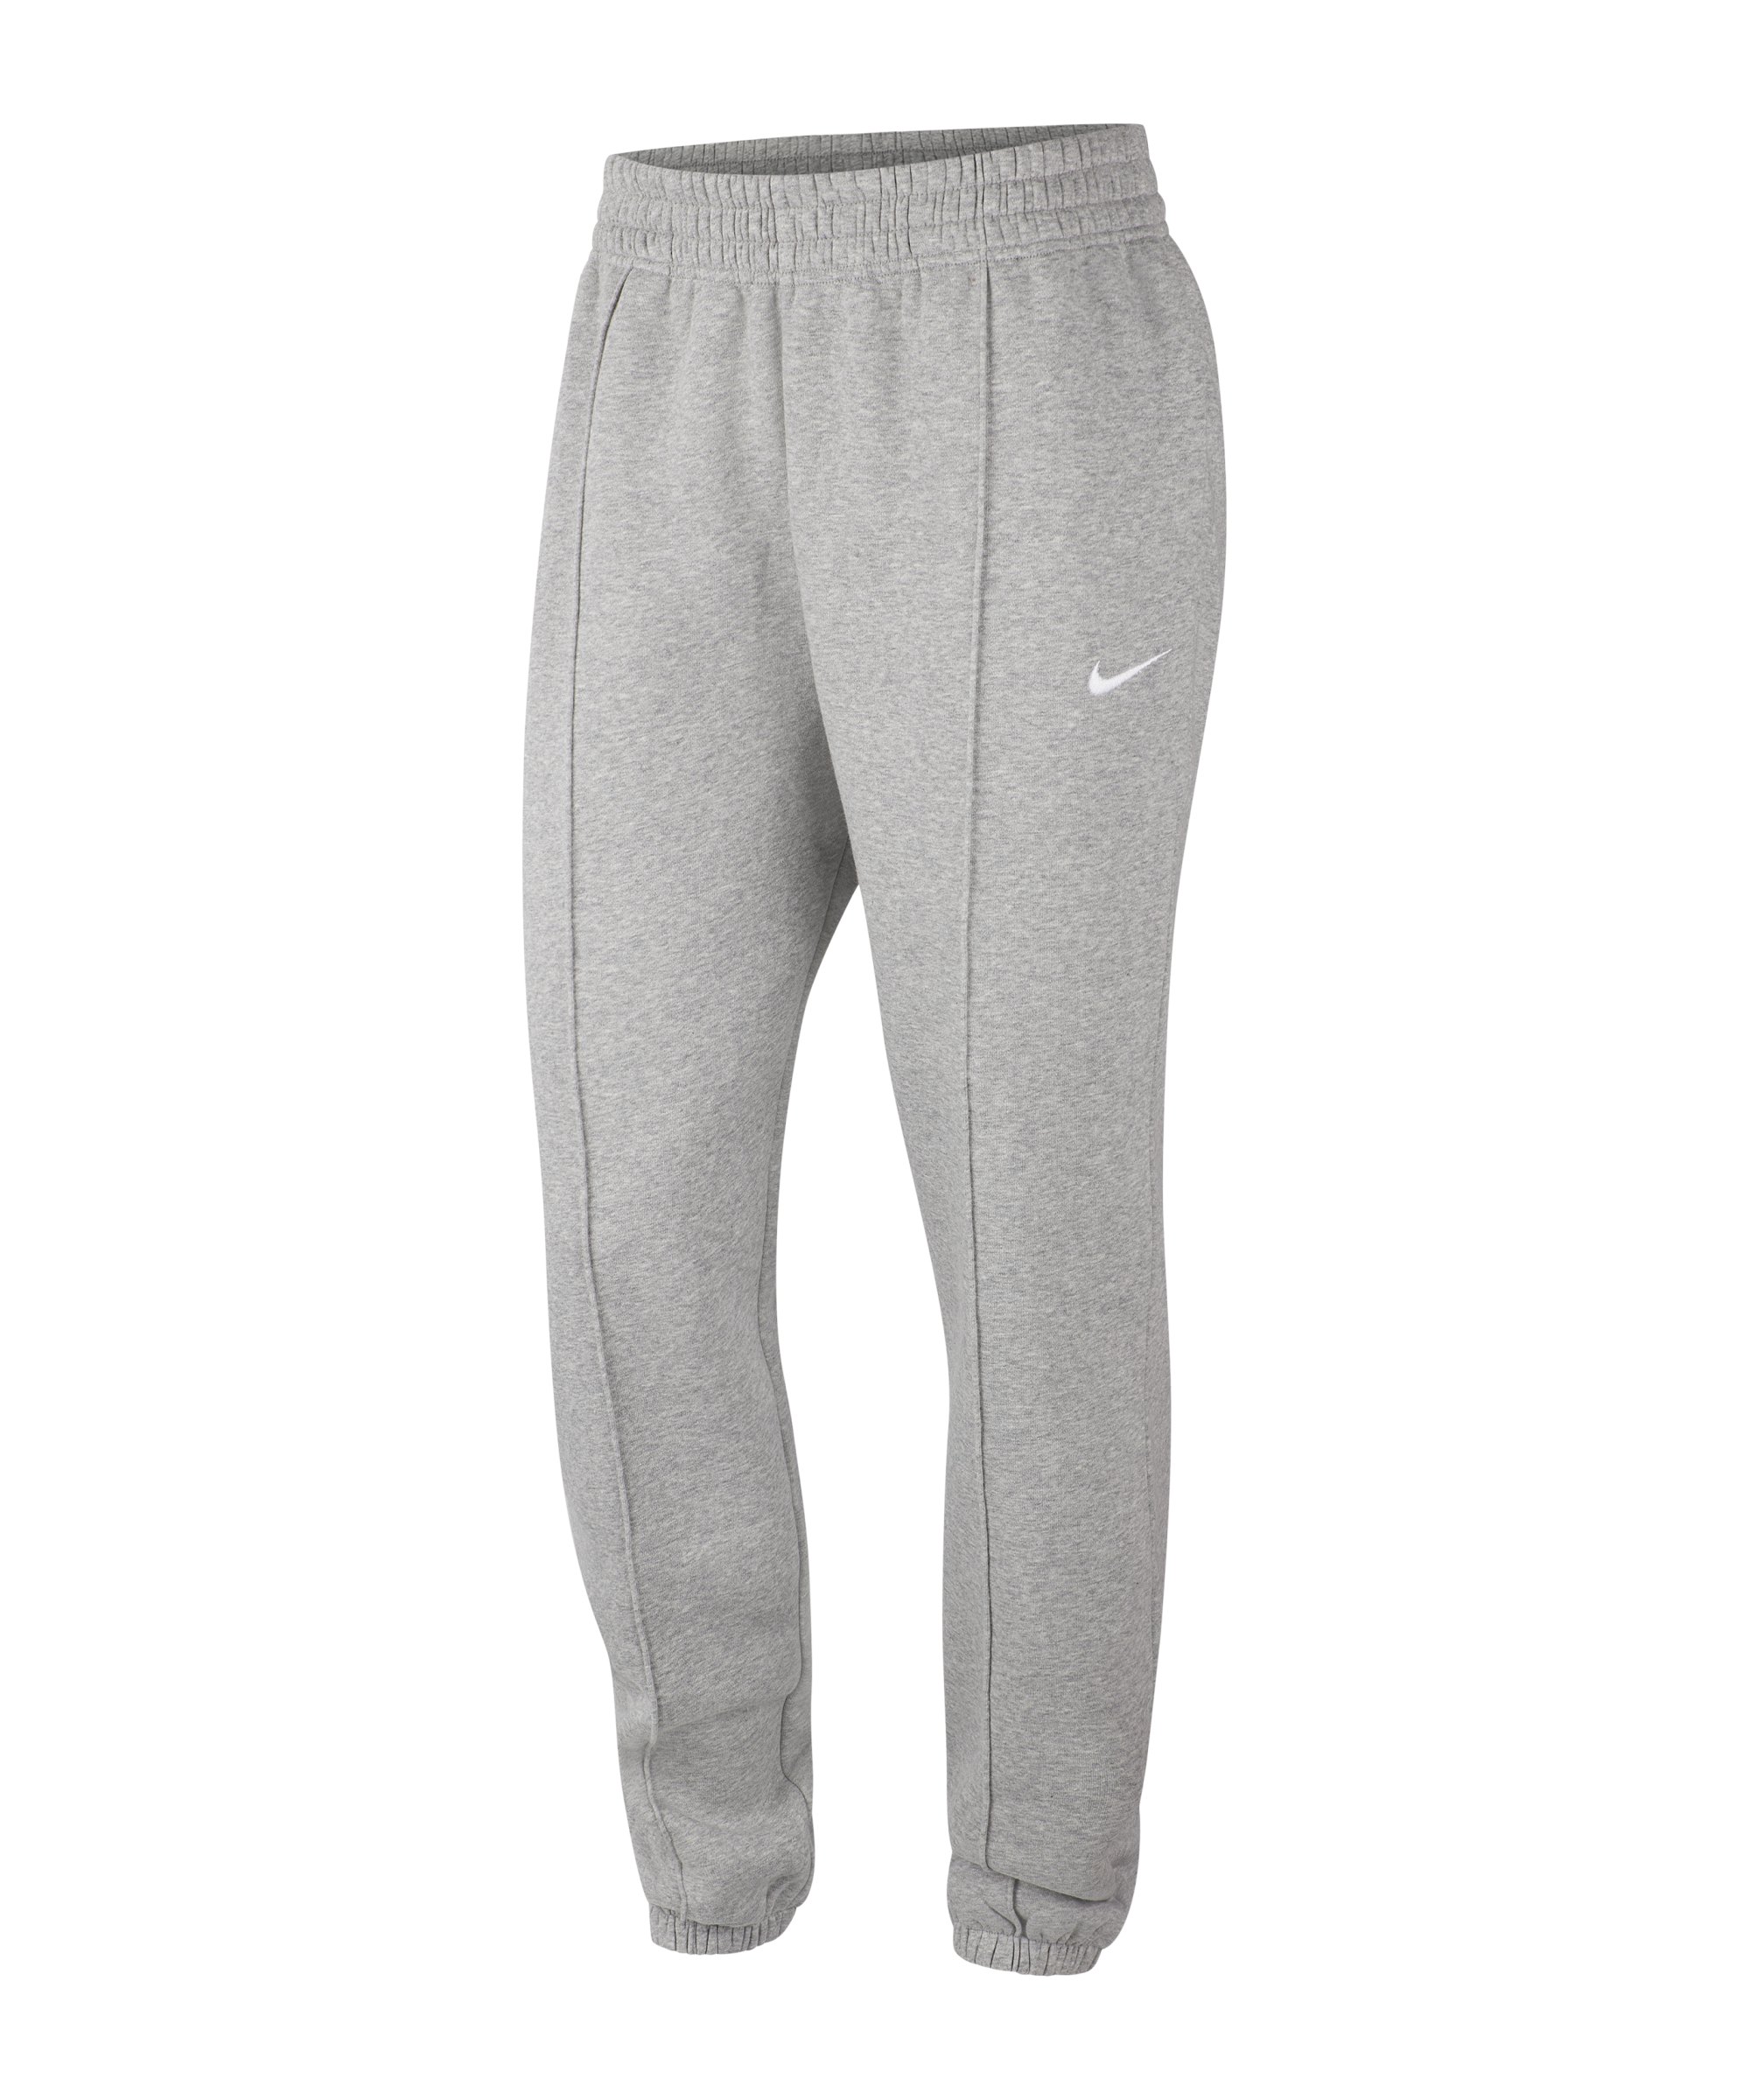 Nike Fleece Jogginghose Damen Grau Weiss F063 - grau